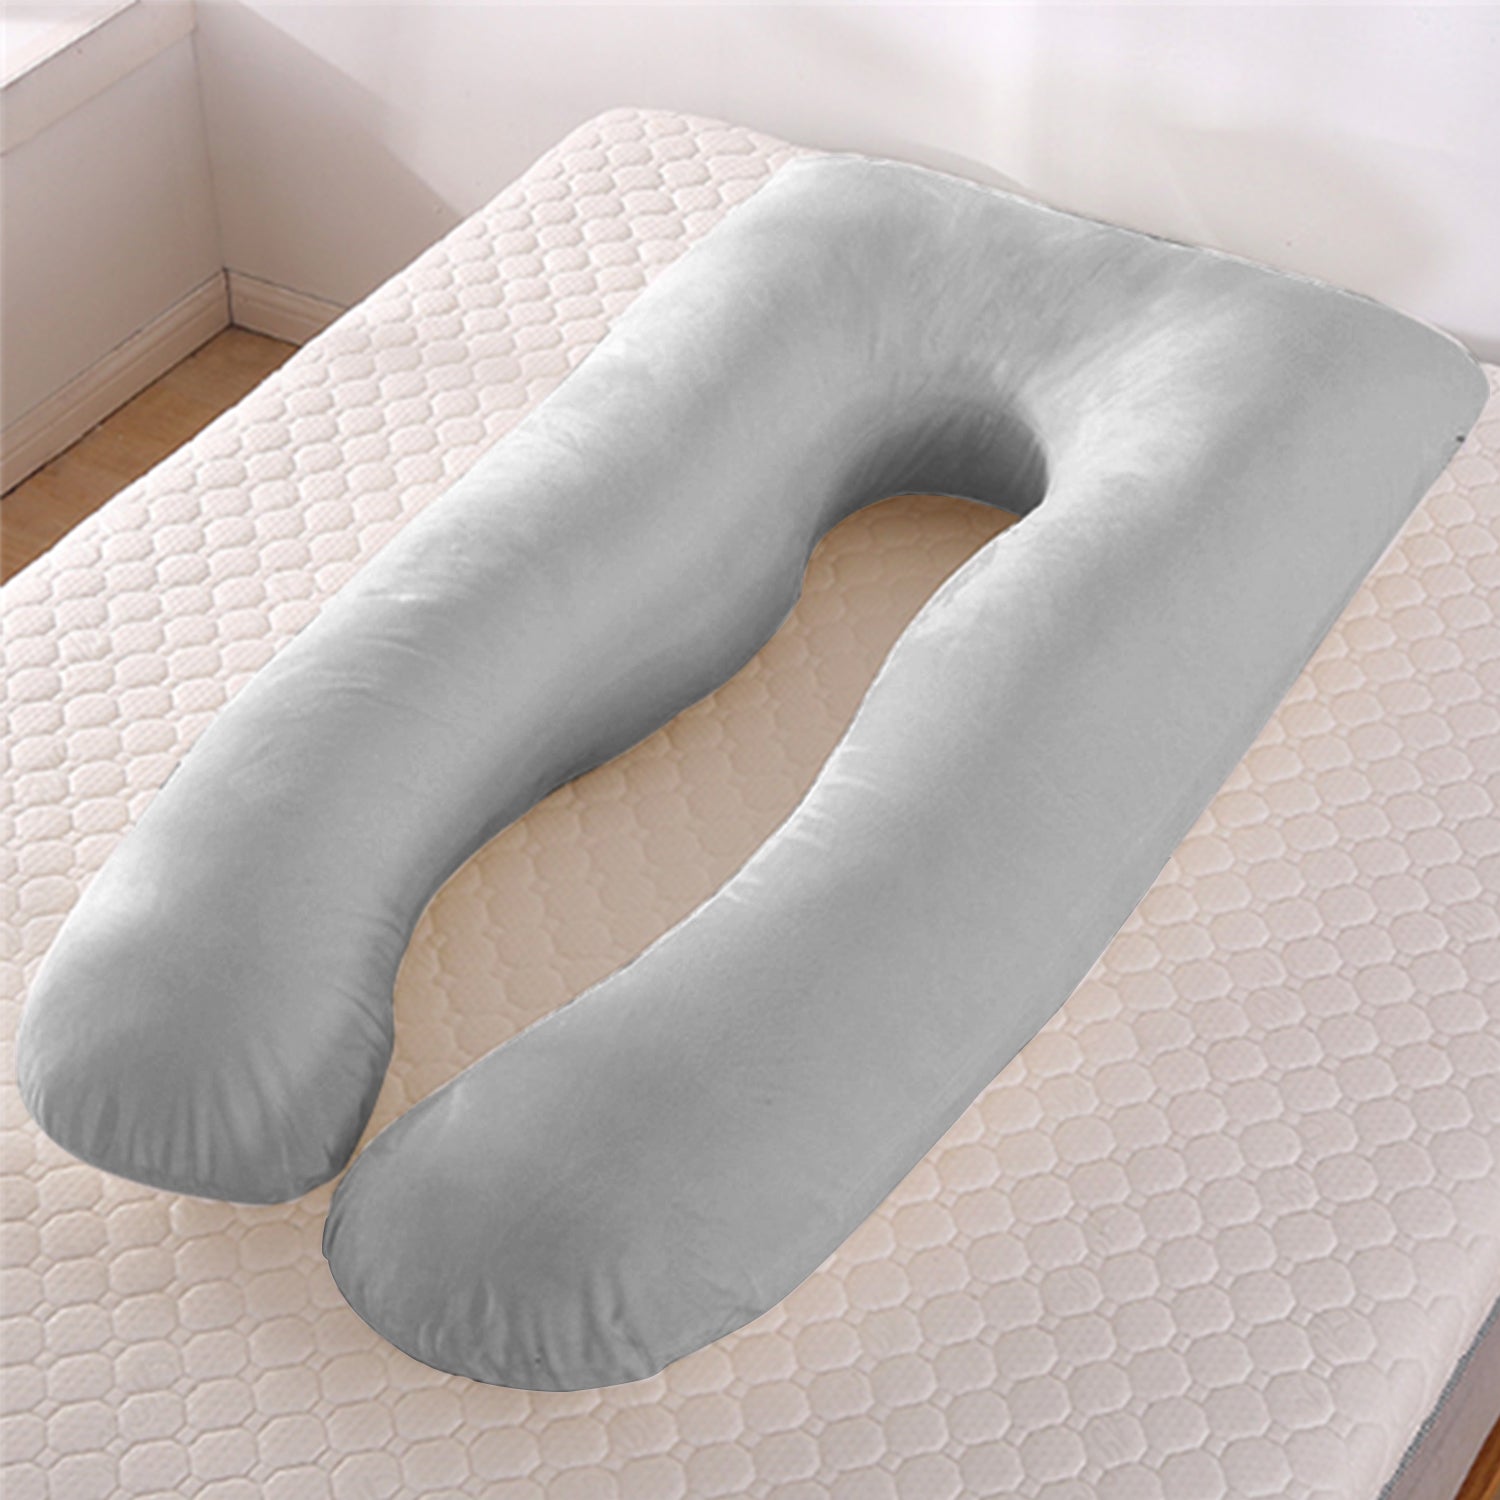 u-shape-pregnancy-pillow